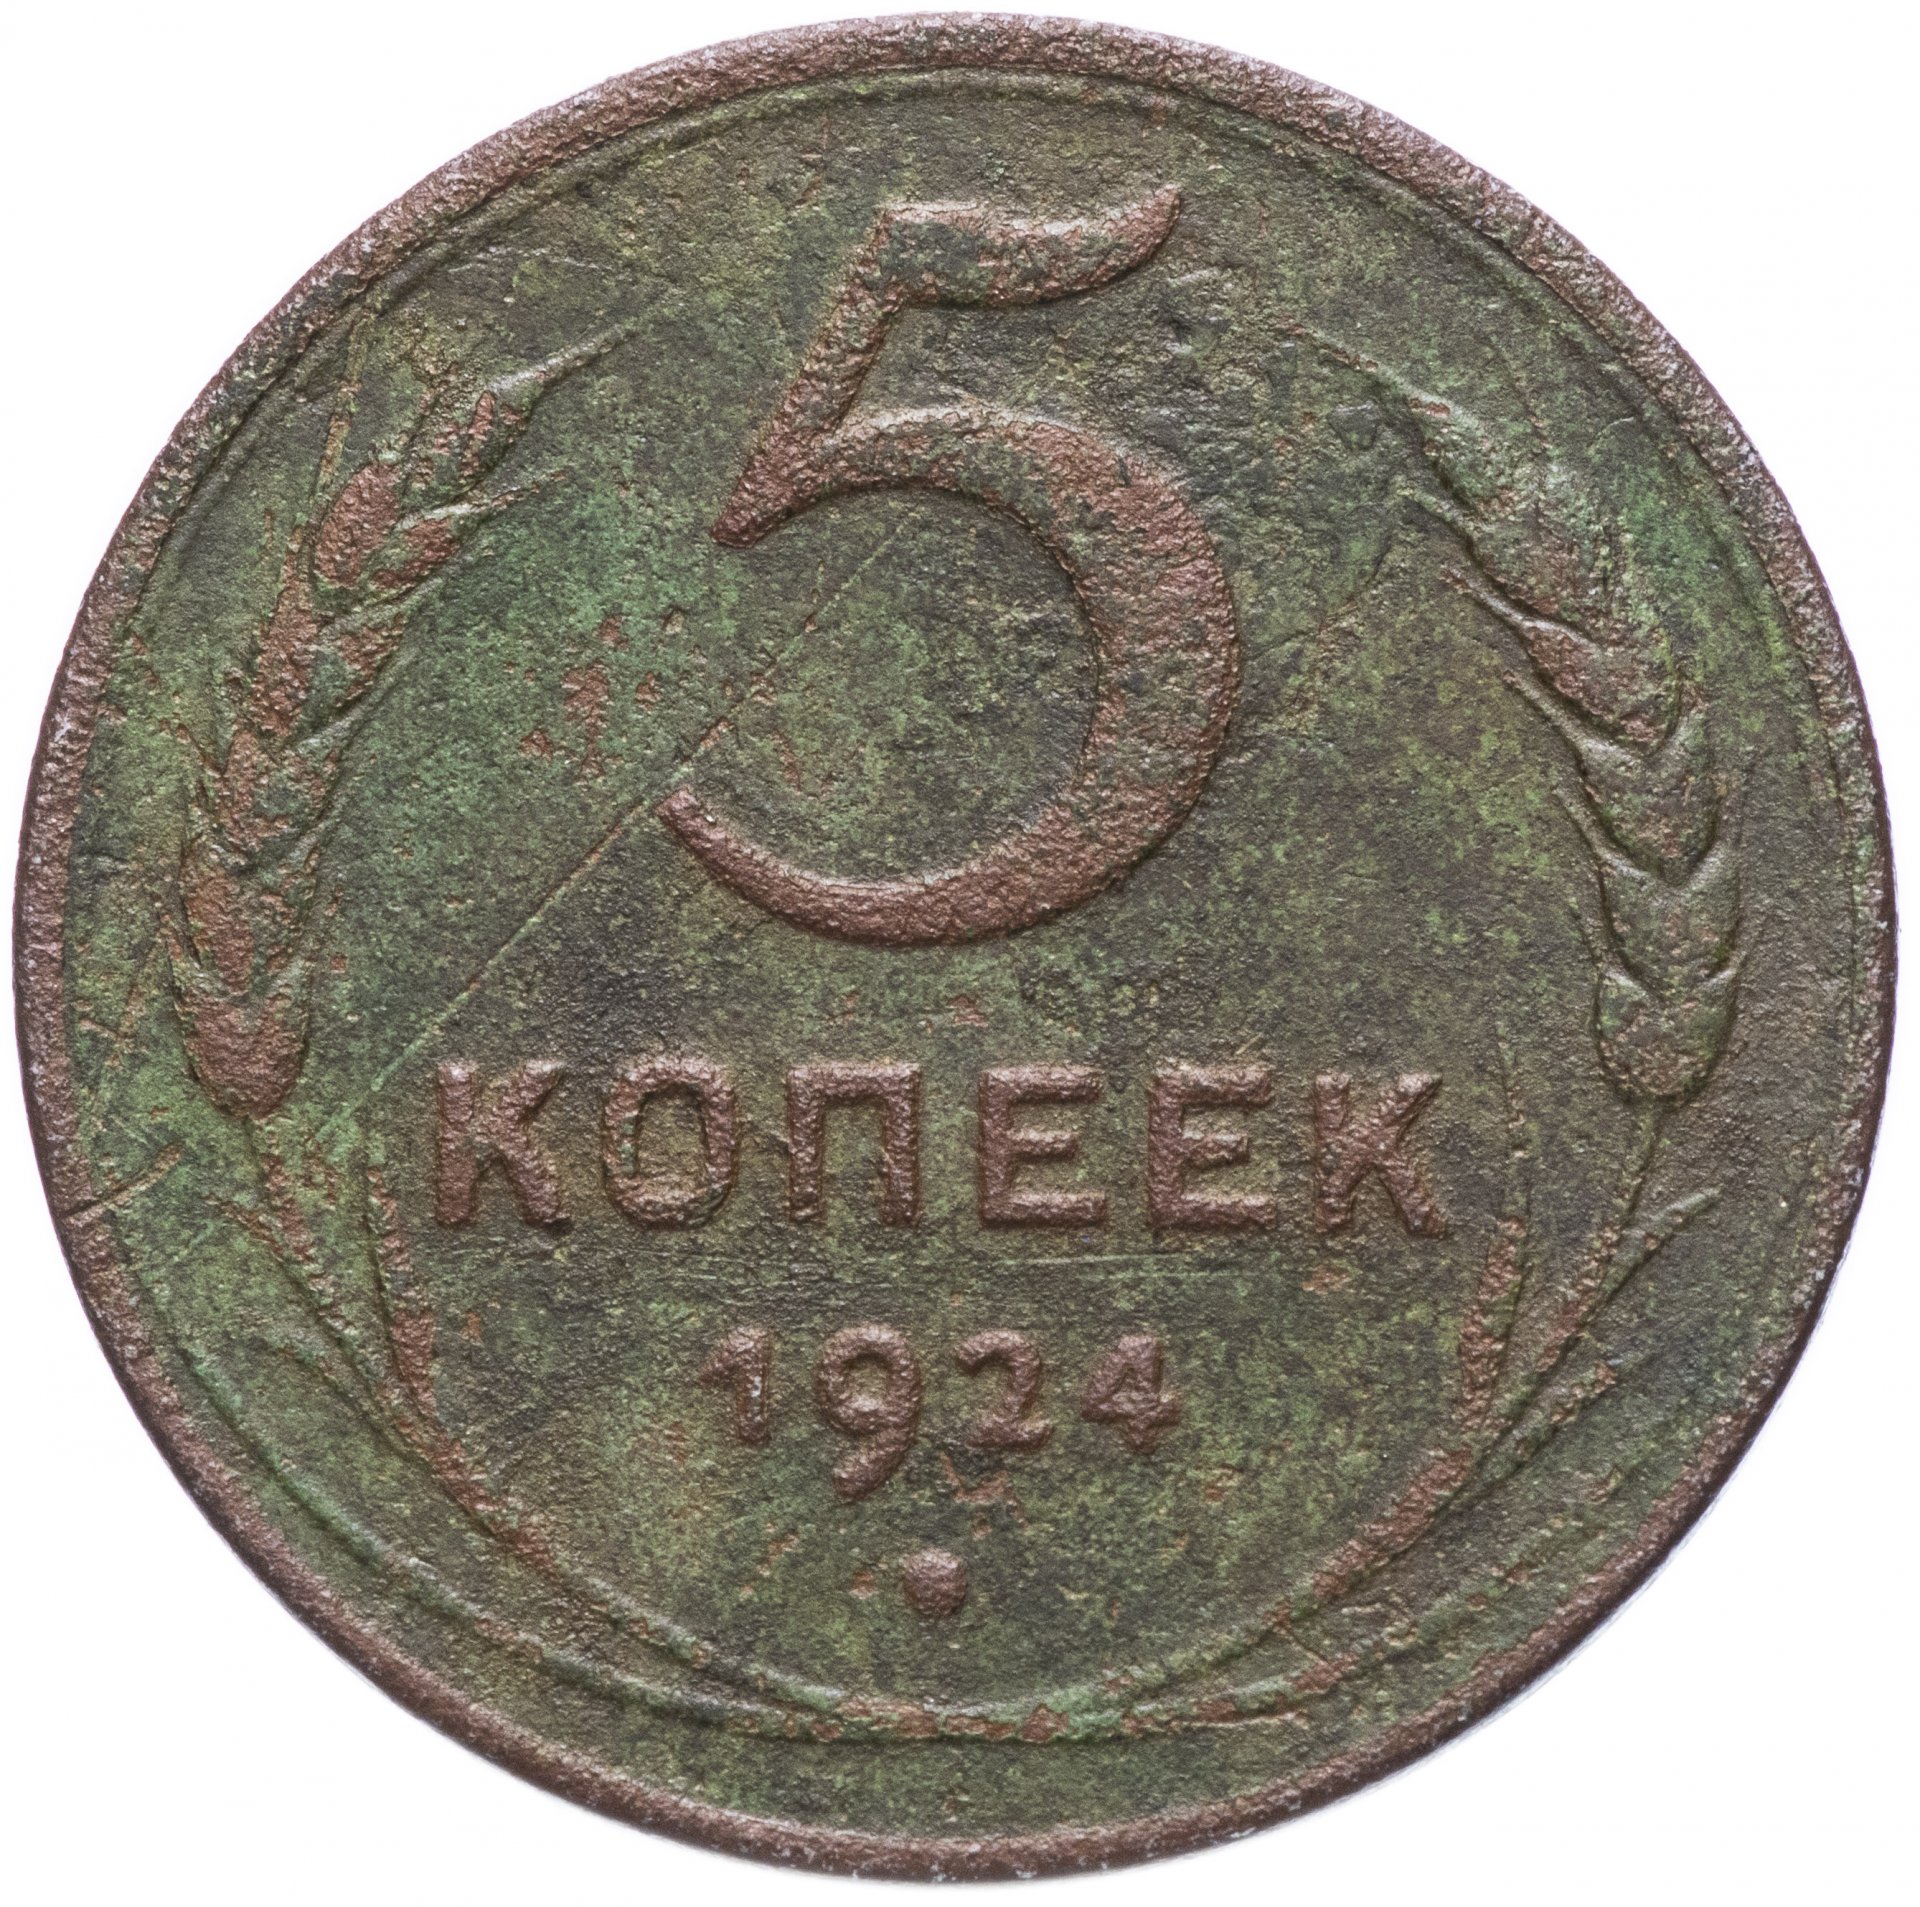 4 рубля 5 копеек. 5 Копеек СССР 1924. Монета 5 копеек 1924 года. Пять копеек 1924 года. Советские 5 копеек.